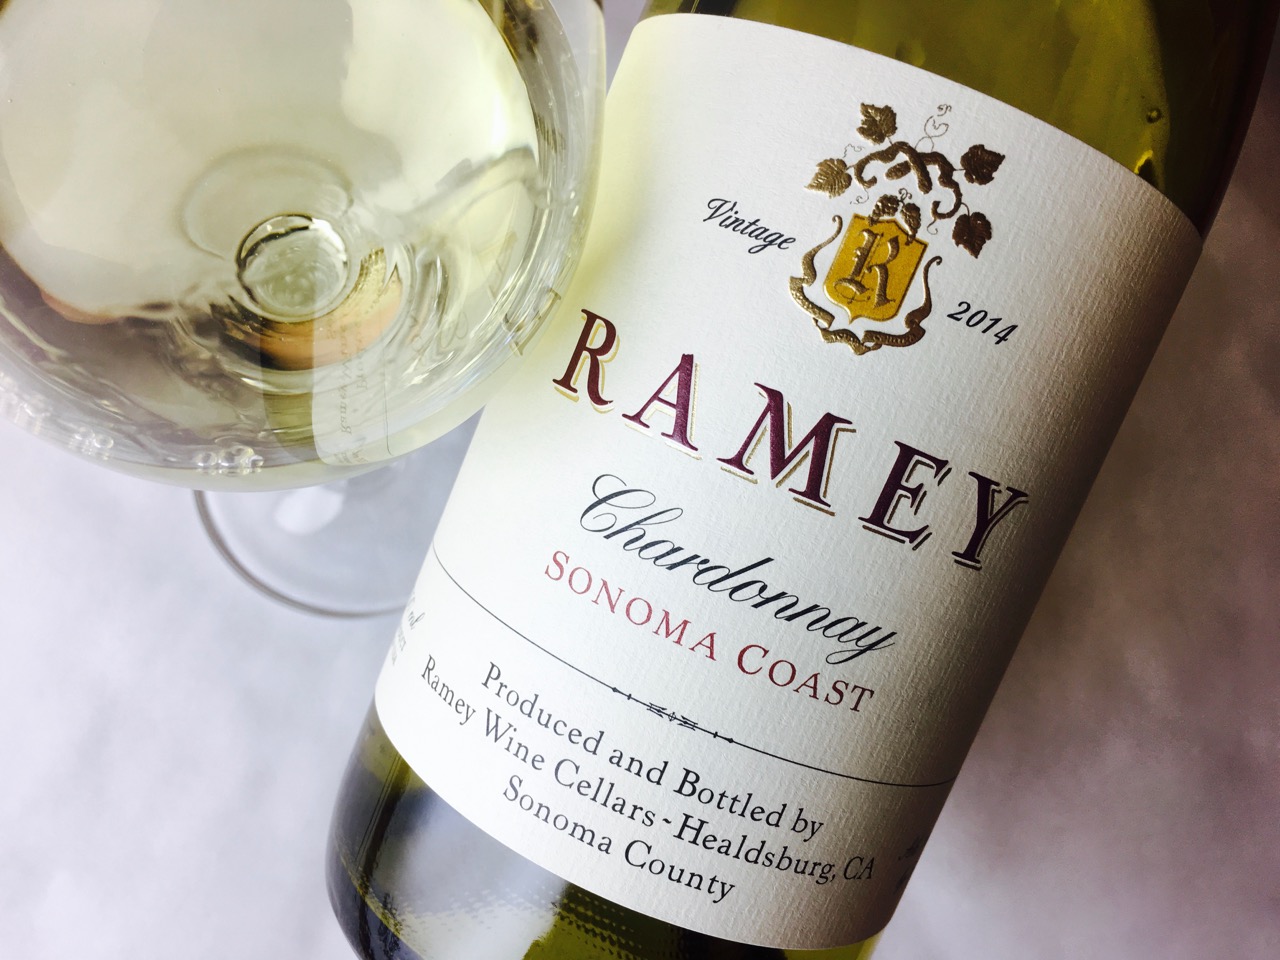 2015 Ramey Chardonnay Sonoma Coast